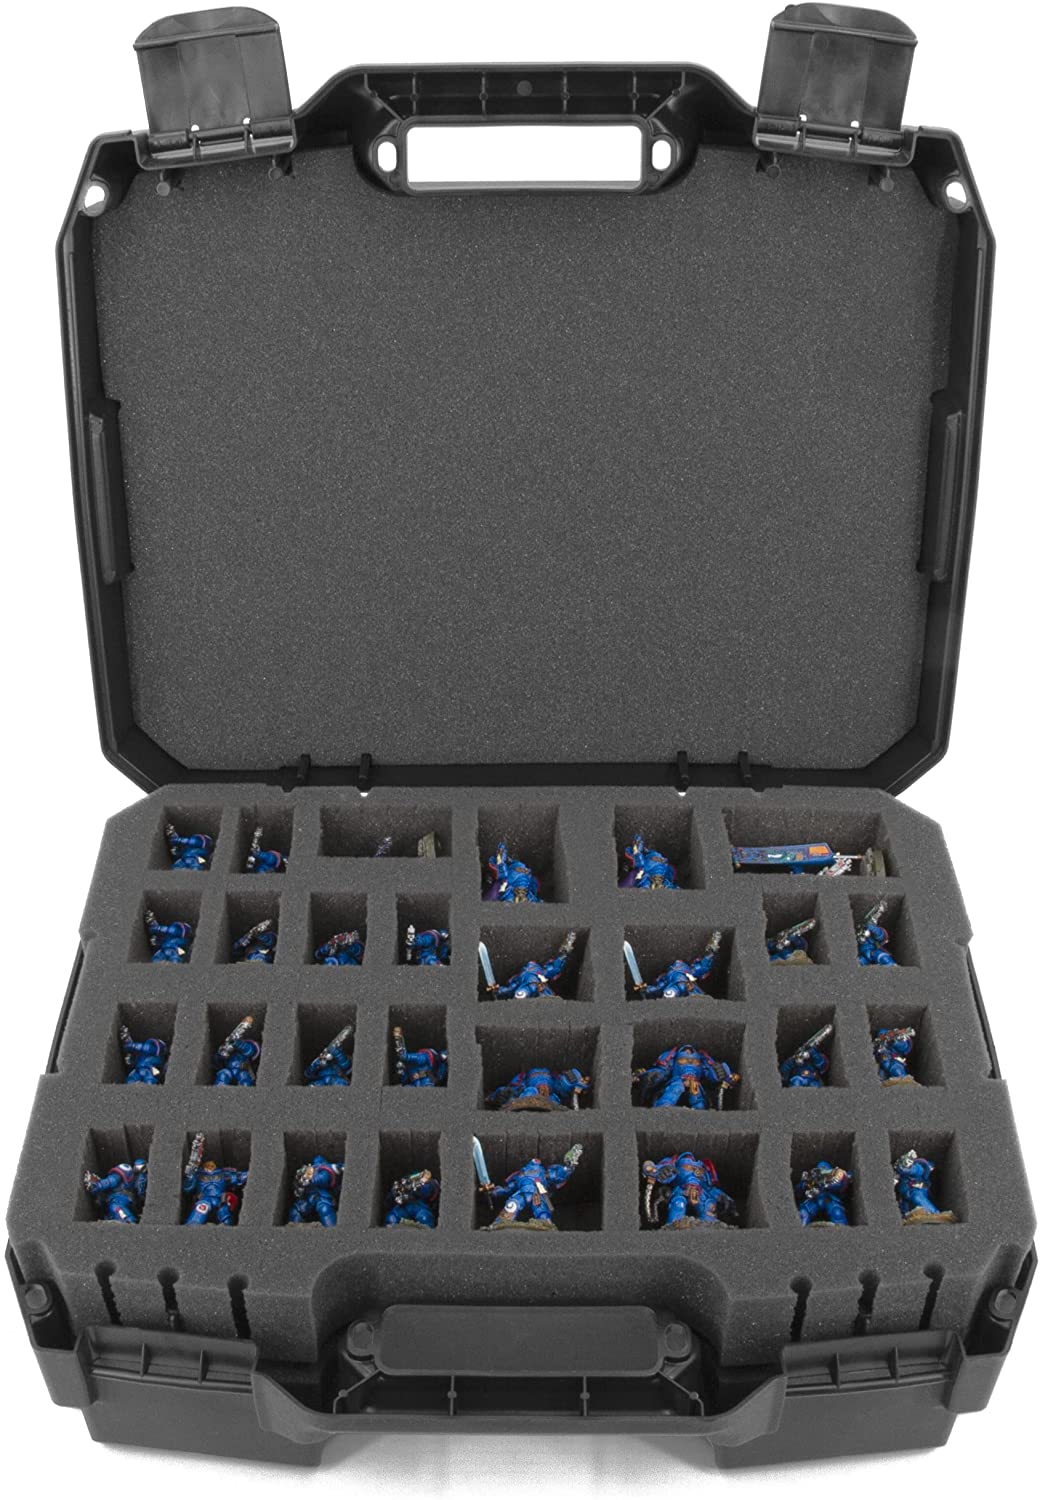 Hard Shell Miniature Storage Travel Case for 36 Figurine 